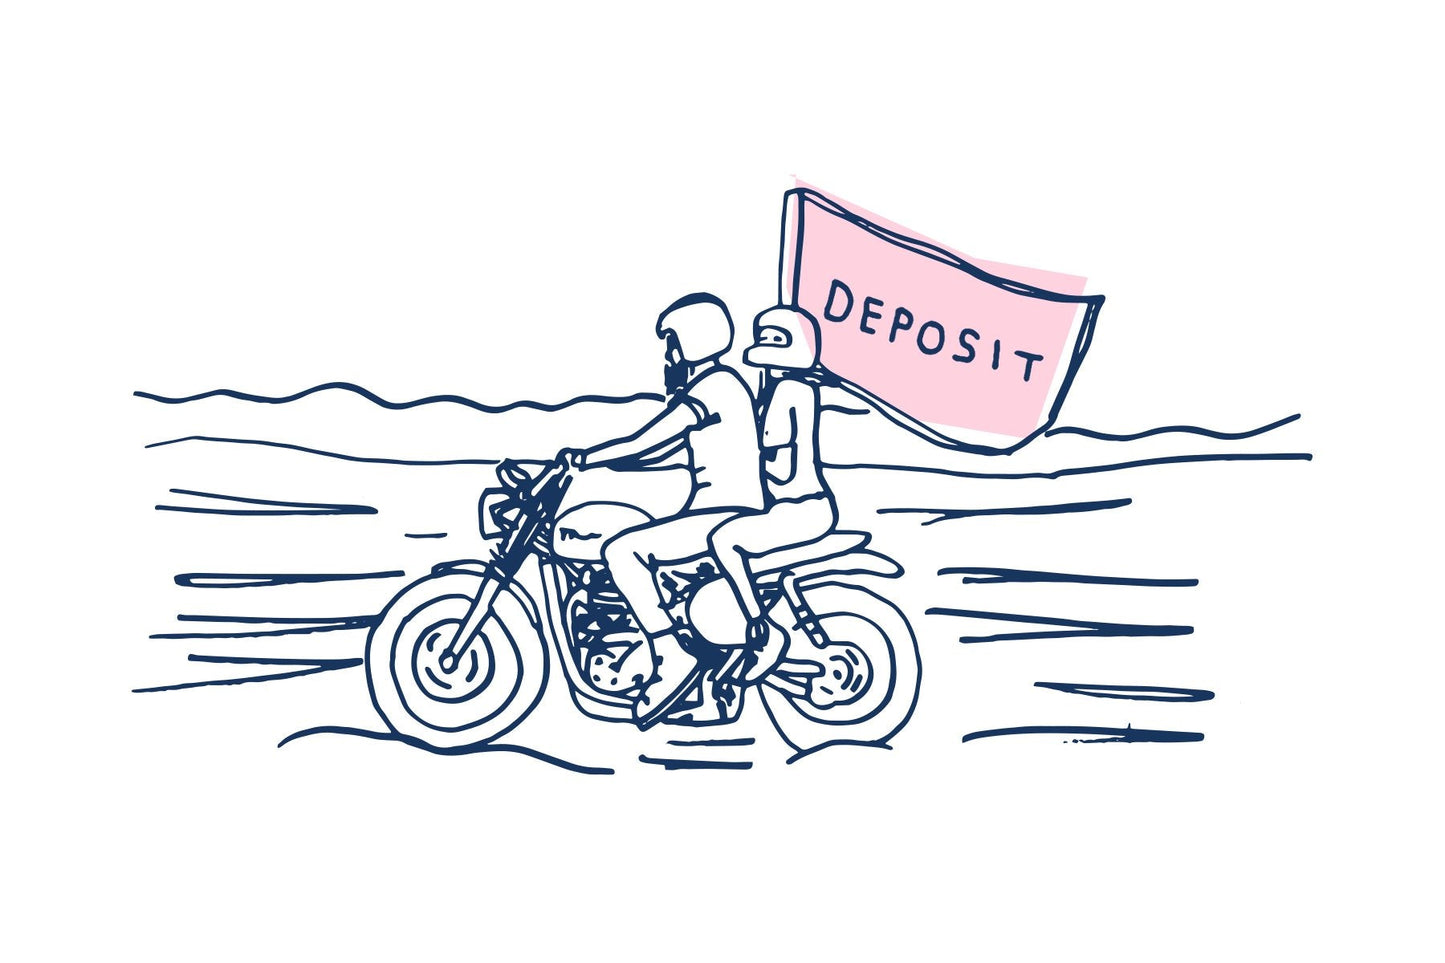 2022 - Design Deposit - PS